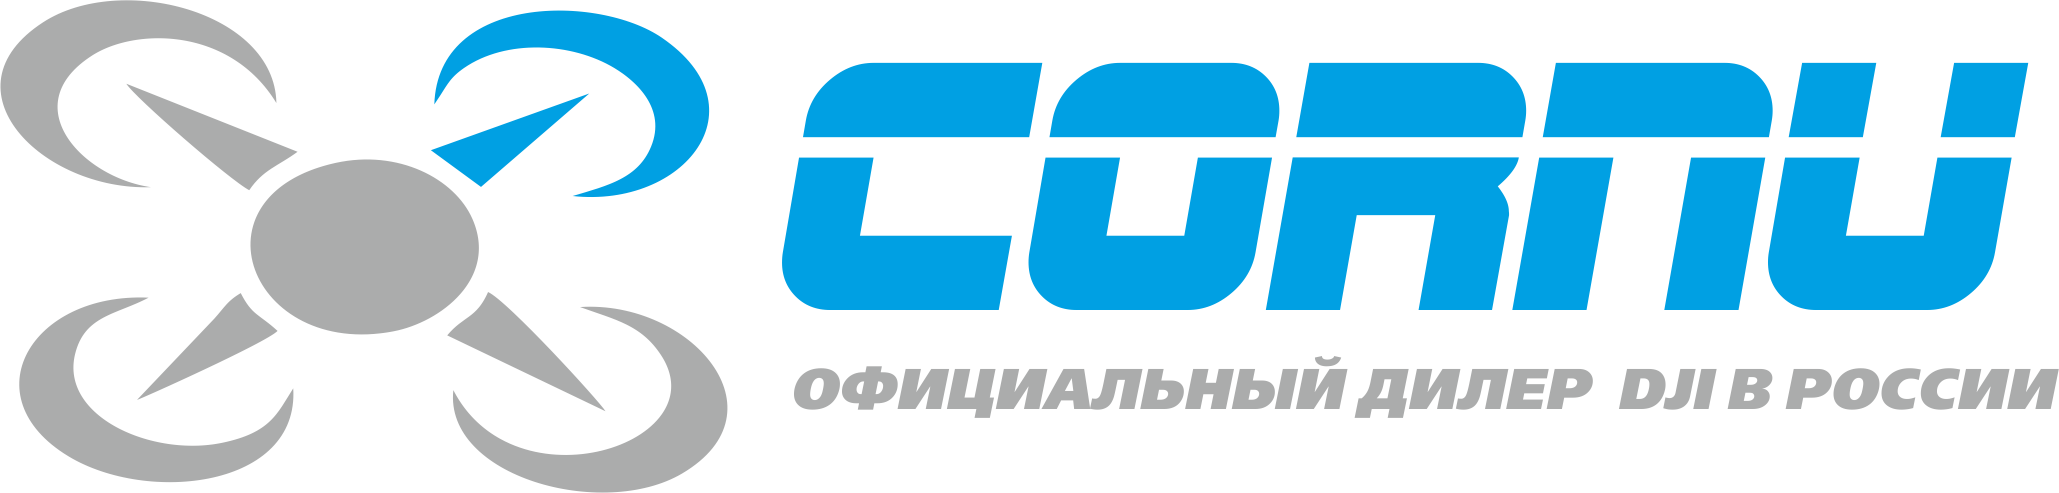 Cornu.ru: продажа квадрокоптеров по всей Росии Mavic, Spark, Phantom, Inspire